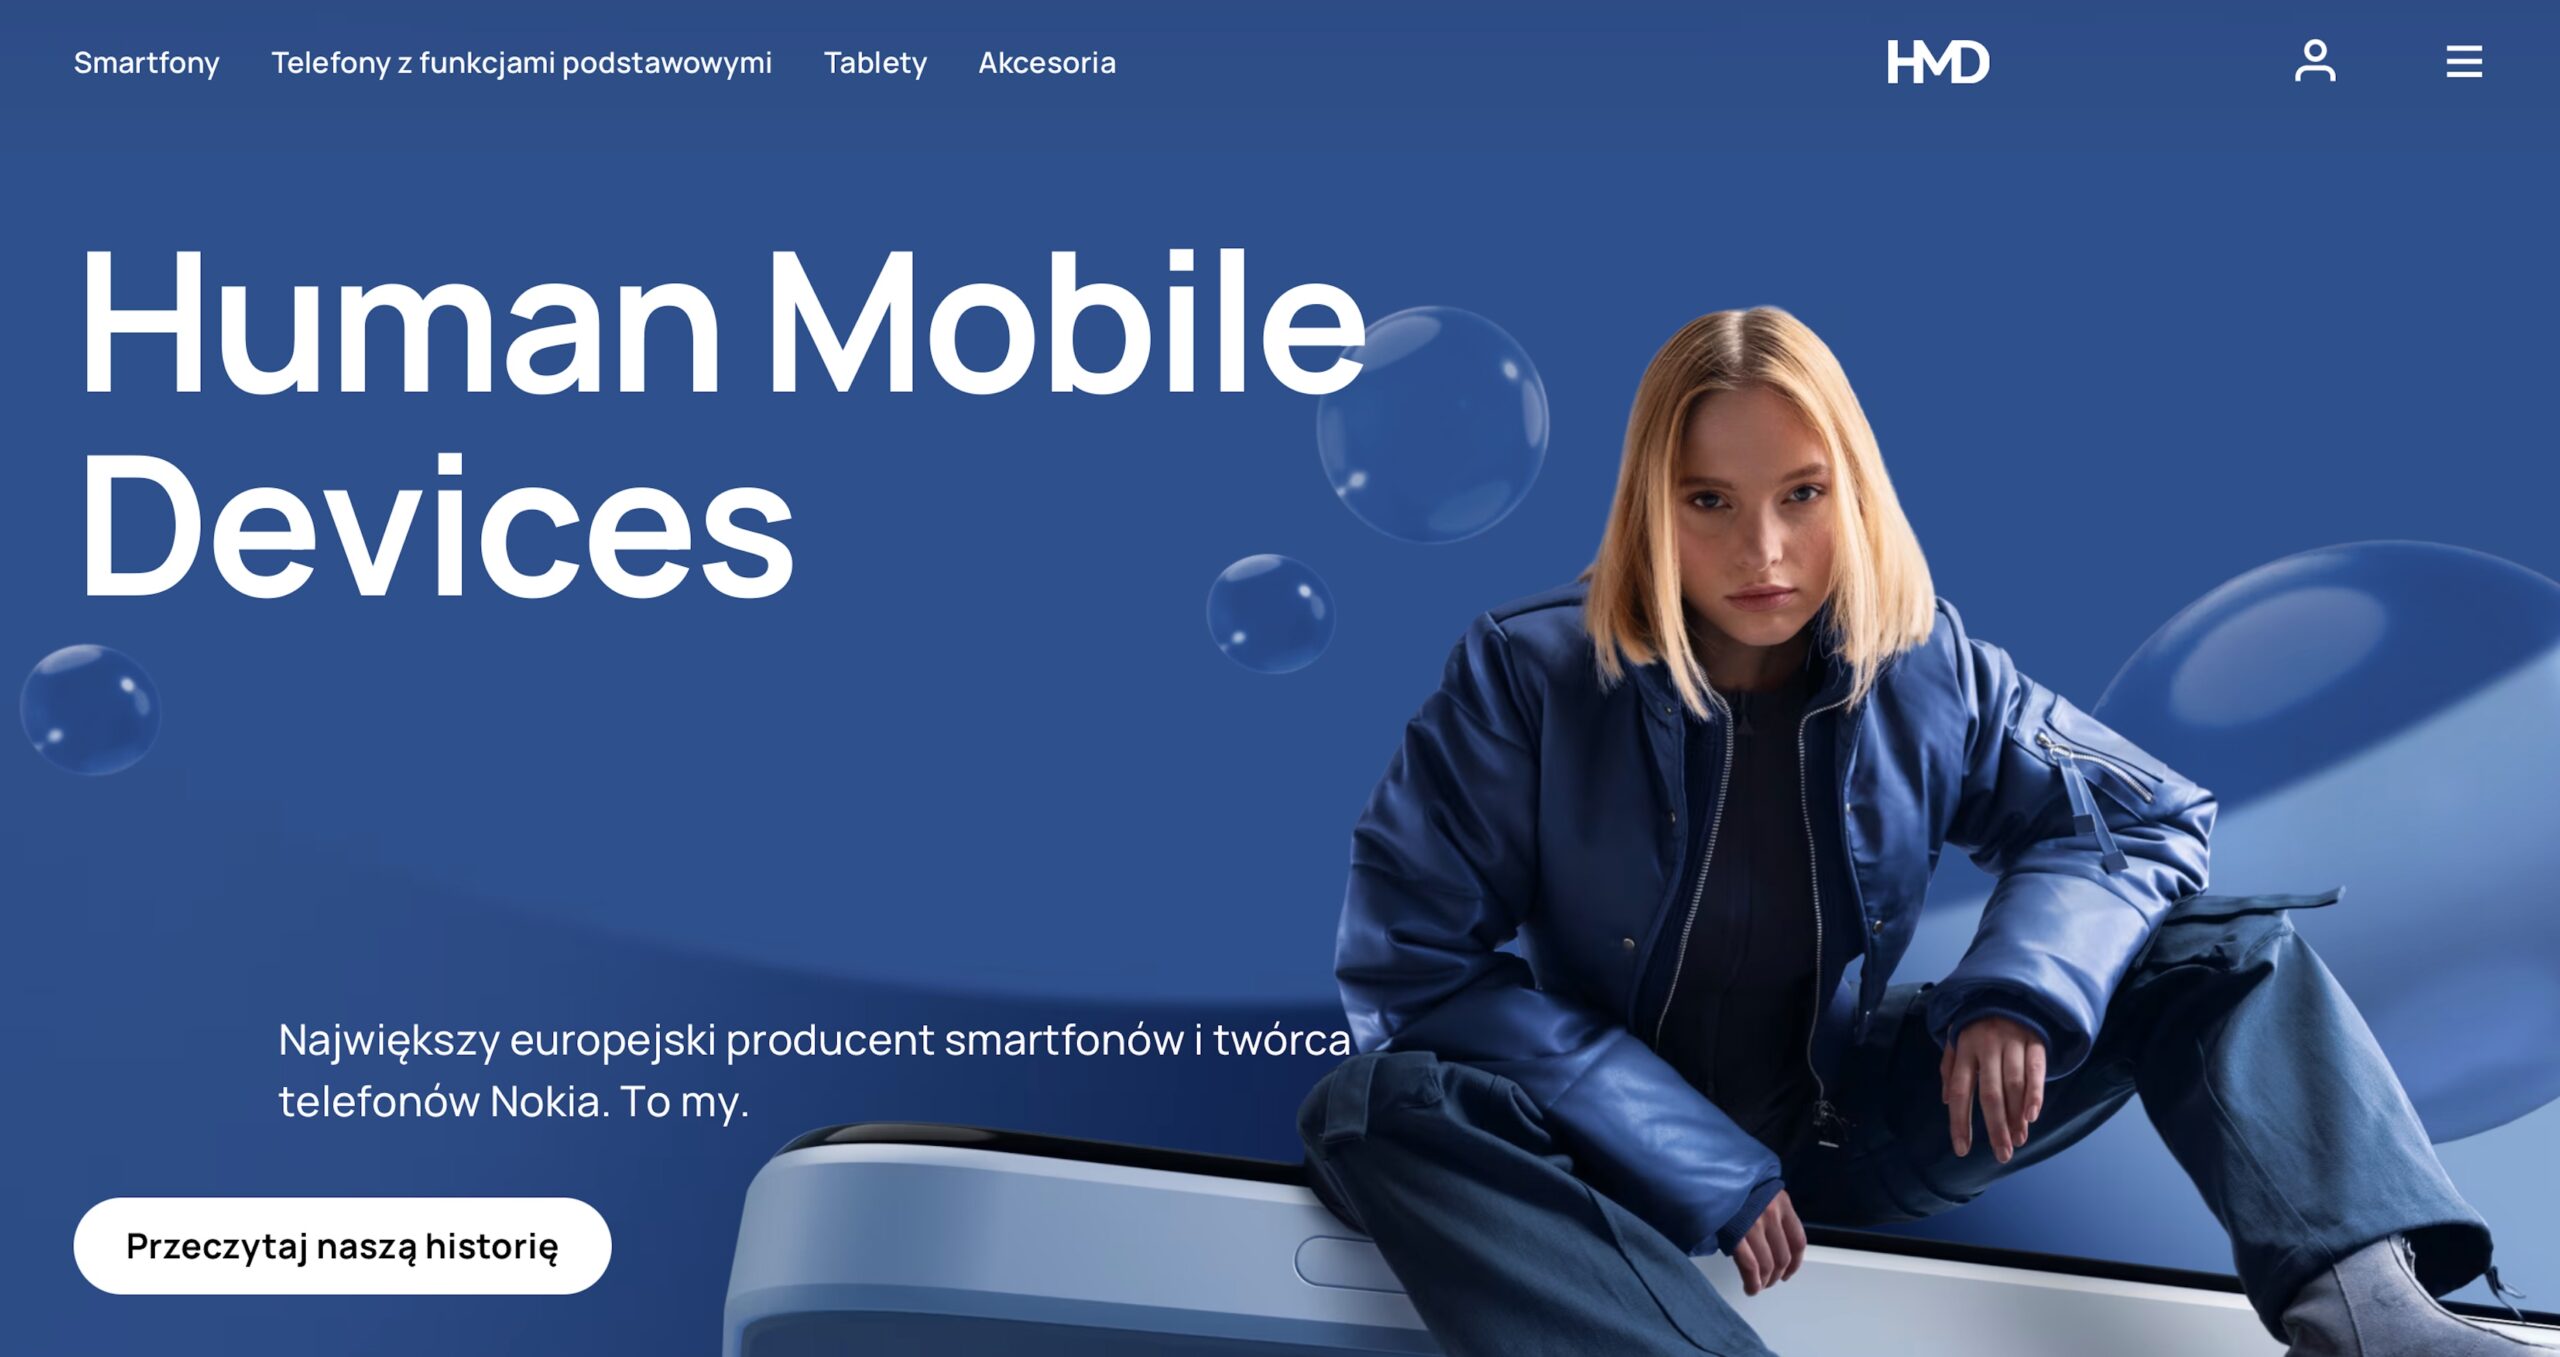 Nokia HMD